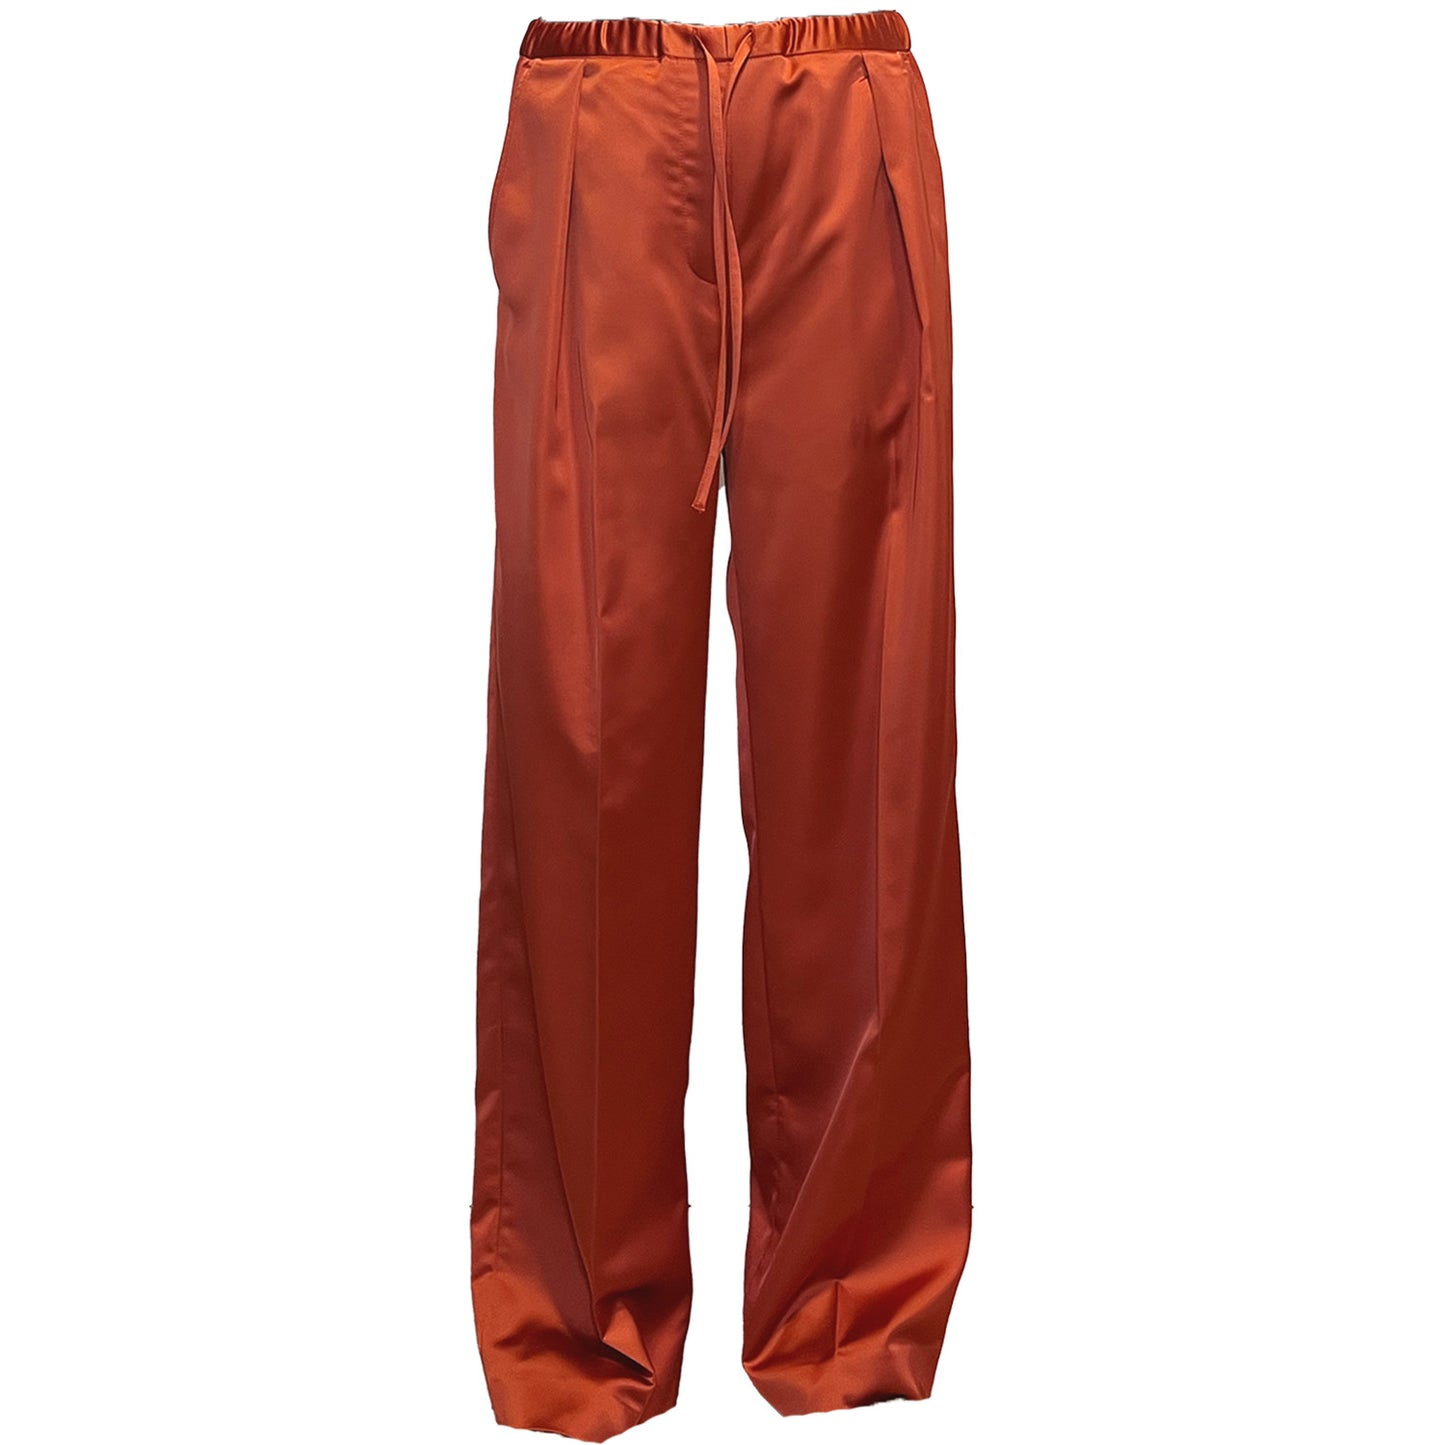 Rothko Collection Orange Pants